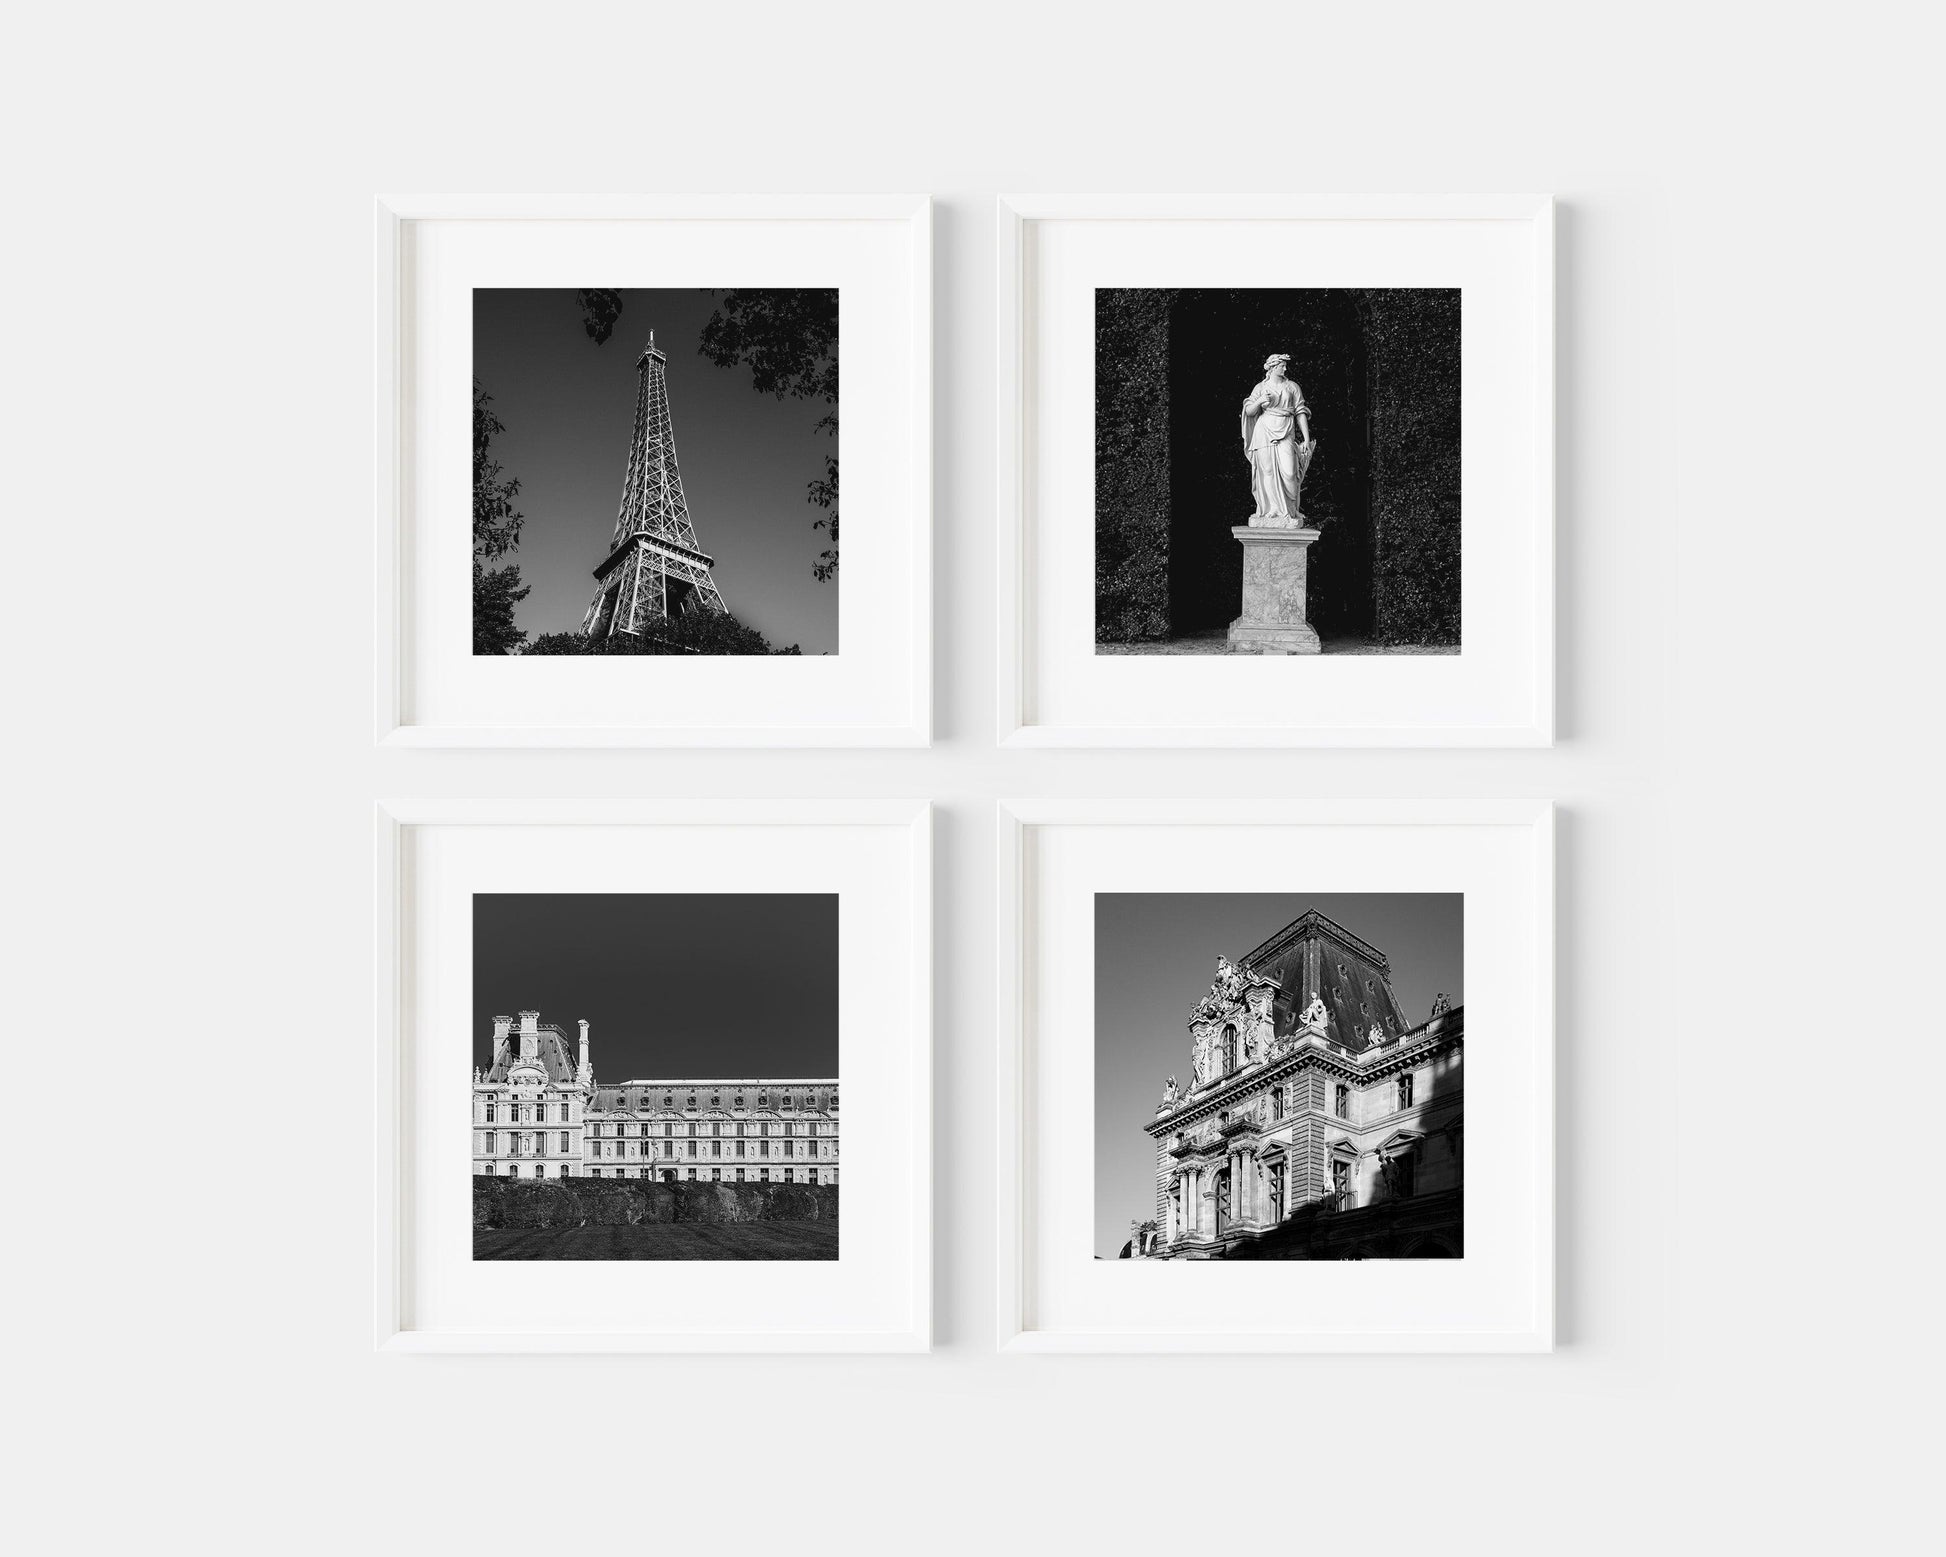 Black and White Square Louvre Museum Print I | Paris Photography Print - Departures Print Shop